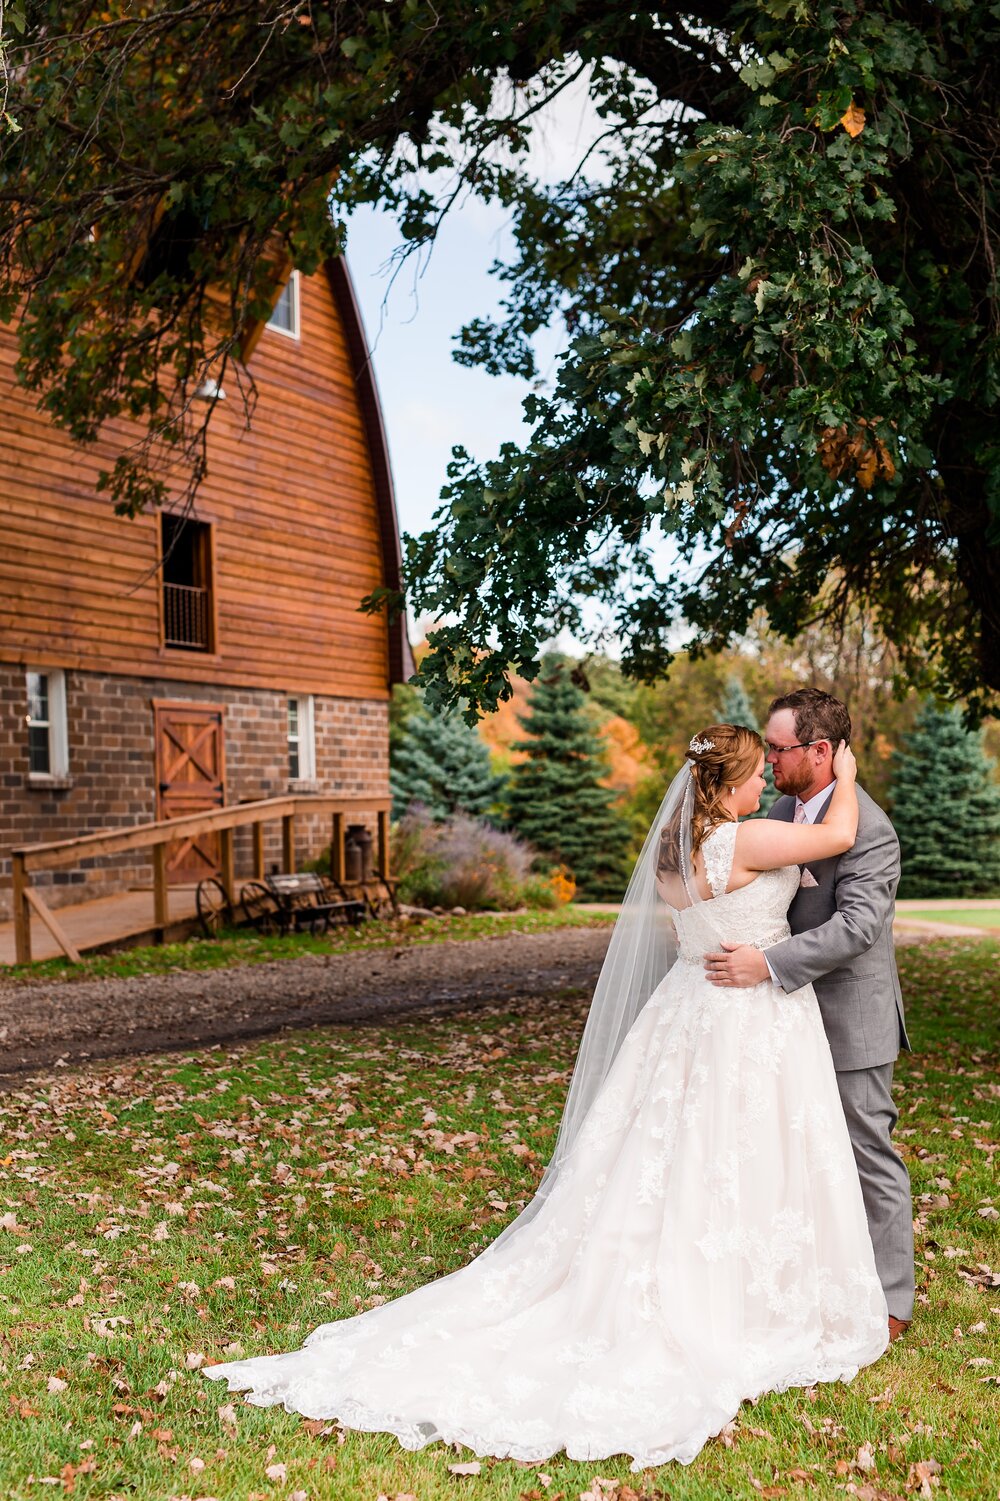 Amber Langerud Photography_Lake Park Minnesota, Outdoor Barn Wedding With Horses_6954.jpg